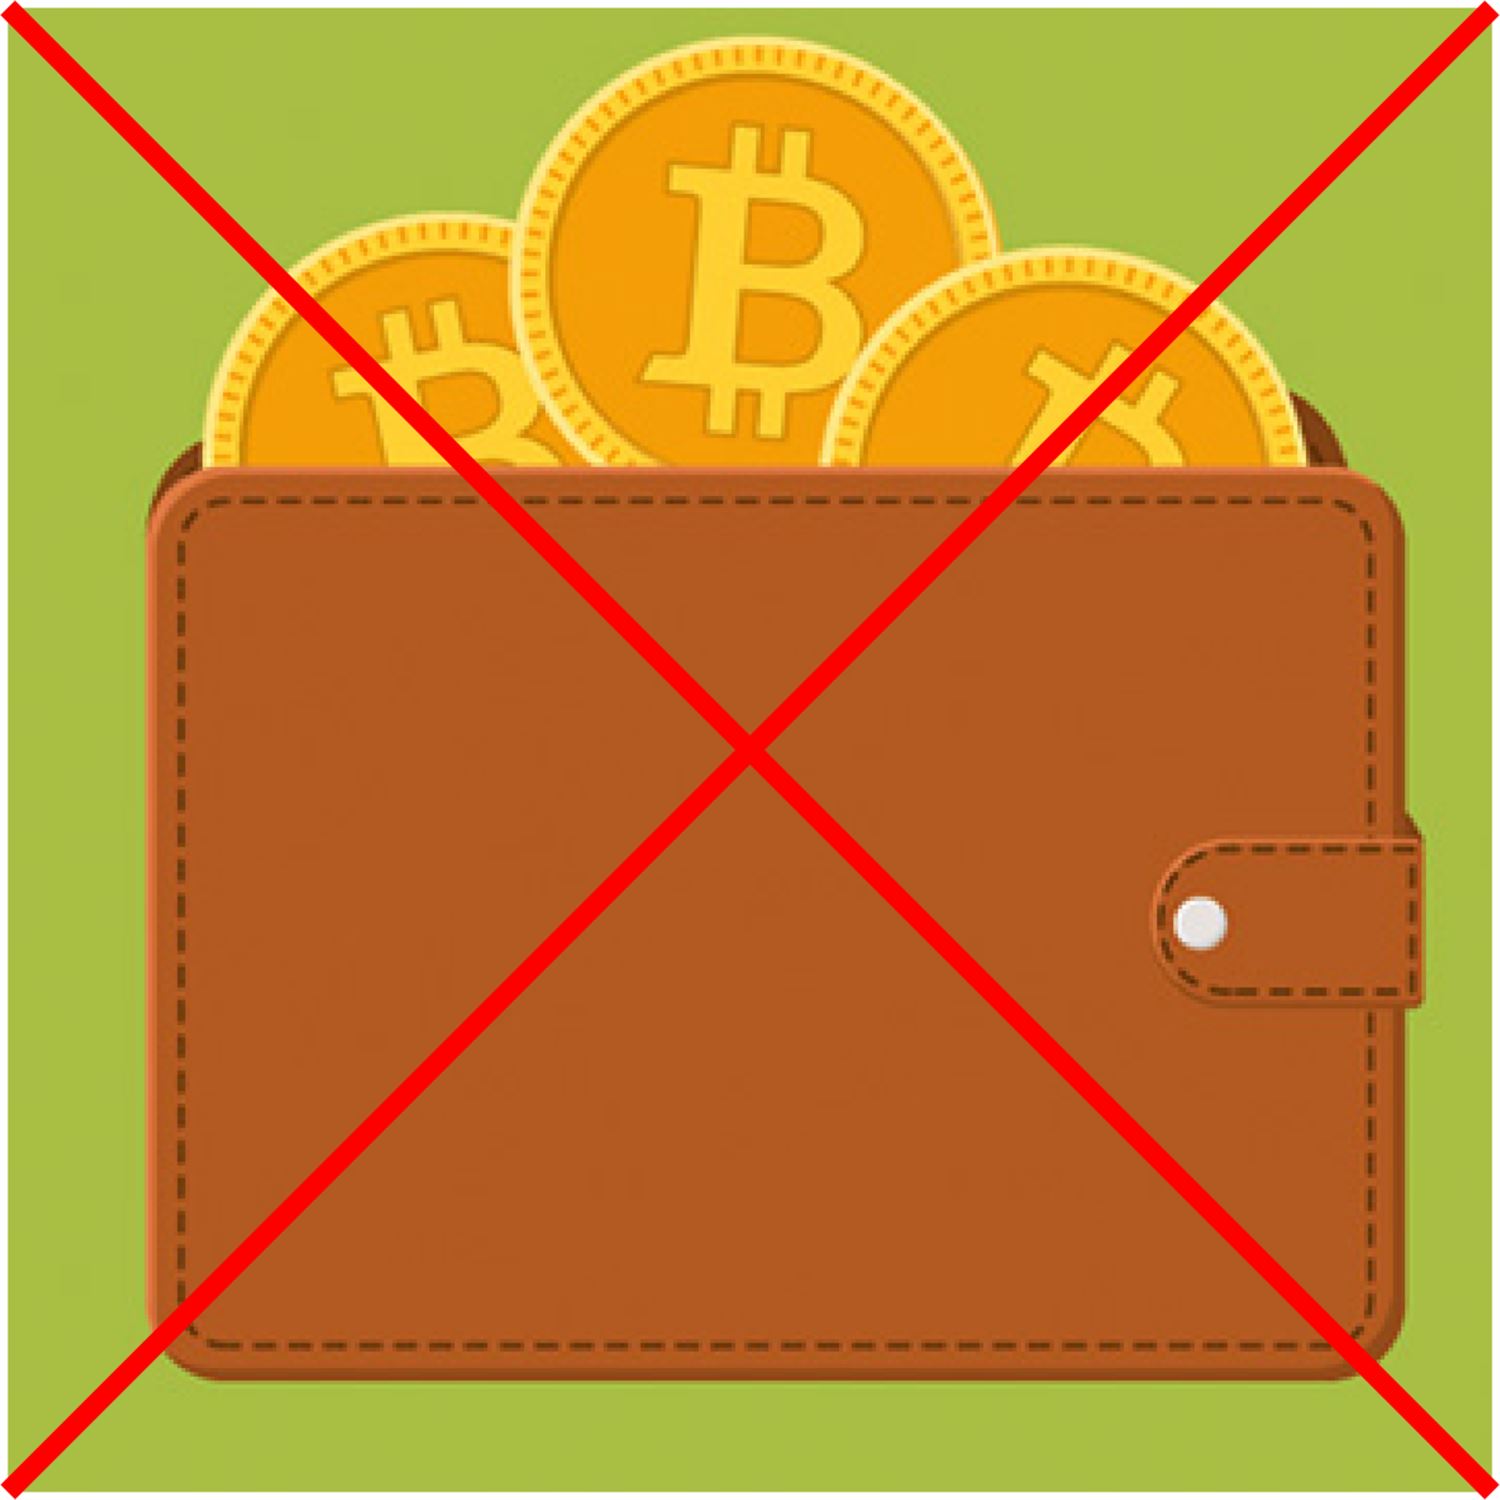 Bitcoin wallets don't 'hold' bitcoin